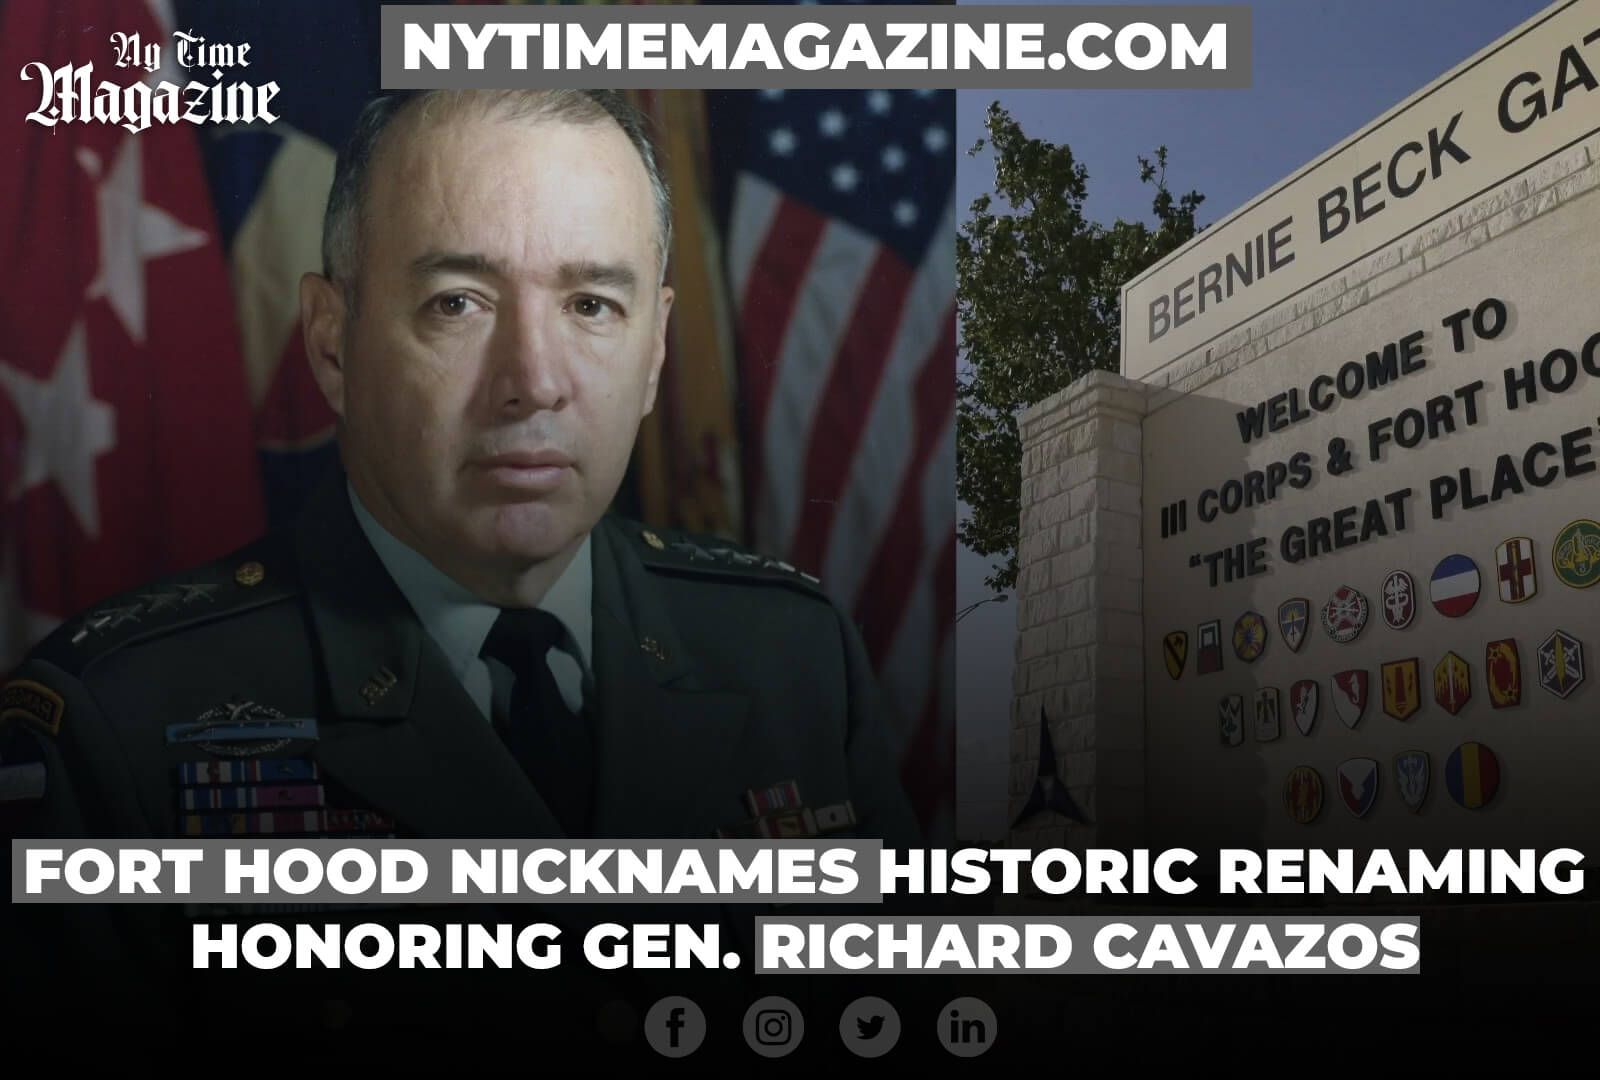 Fort Hood Nicknames to be renamed for Gen. Richard Cavazos